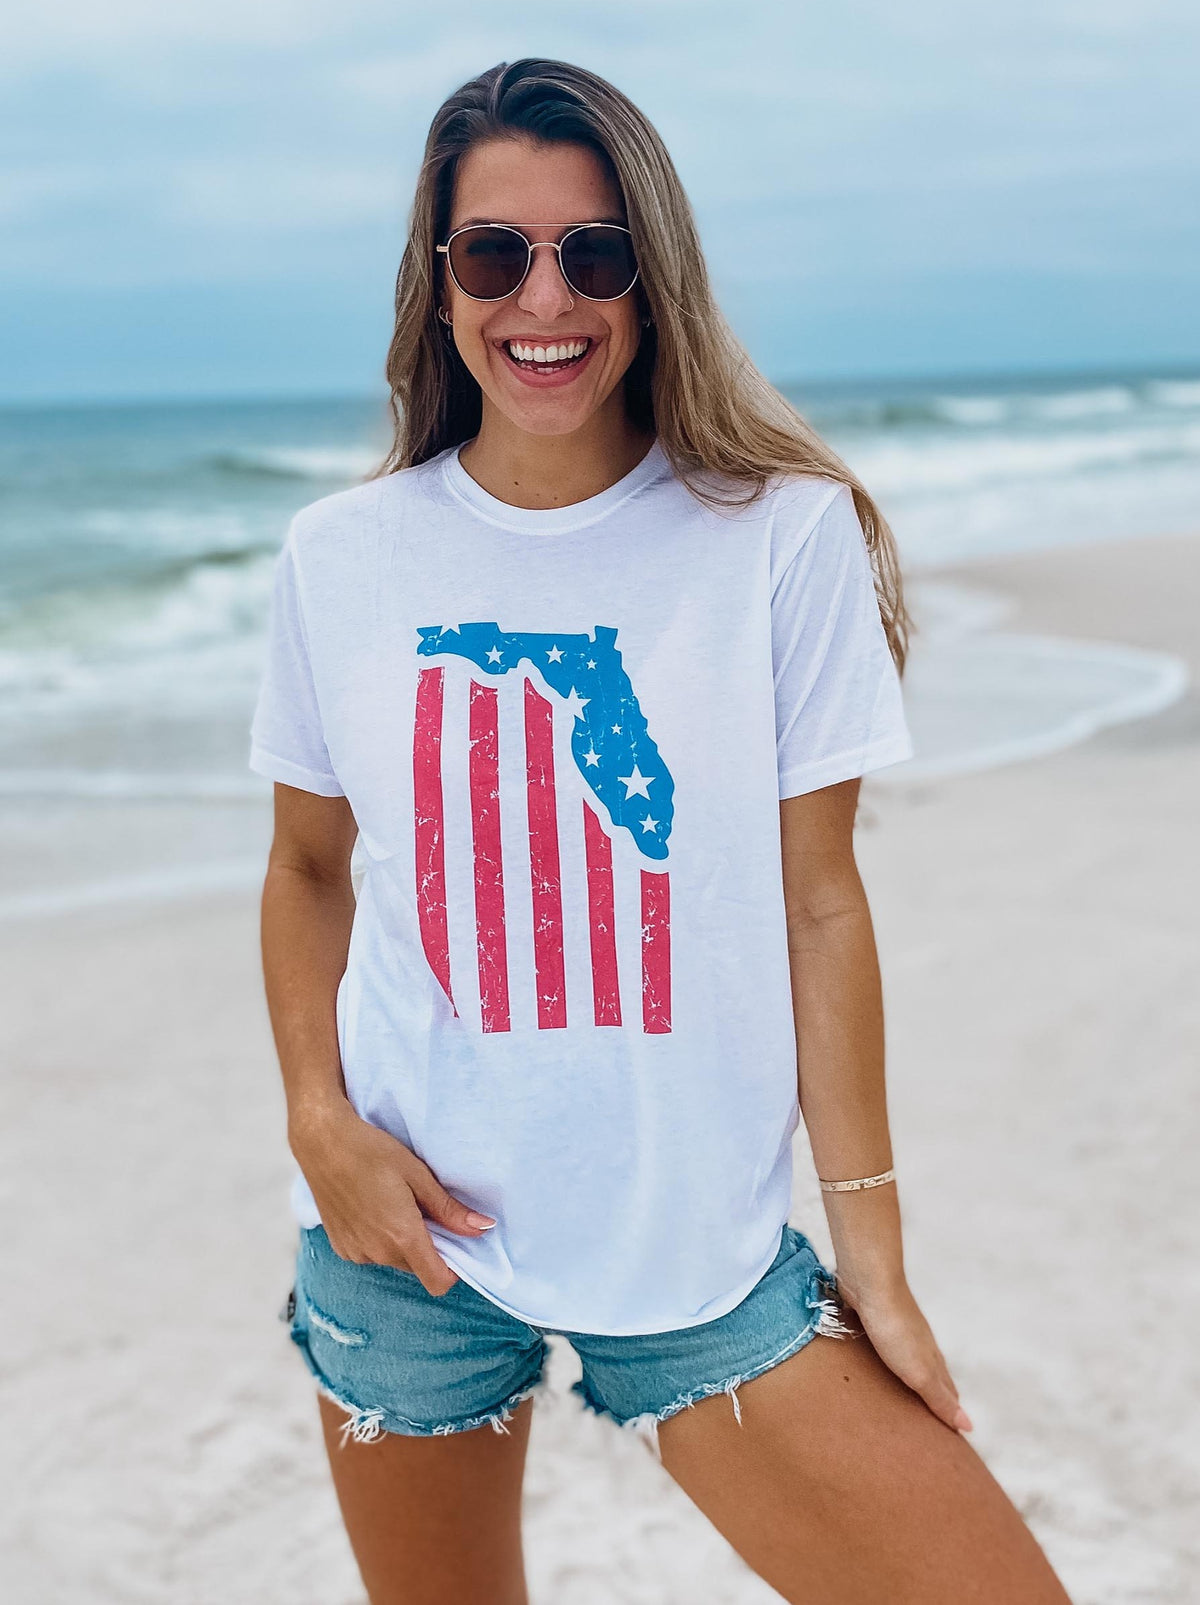 Florida State T-Shirt